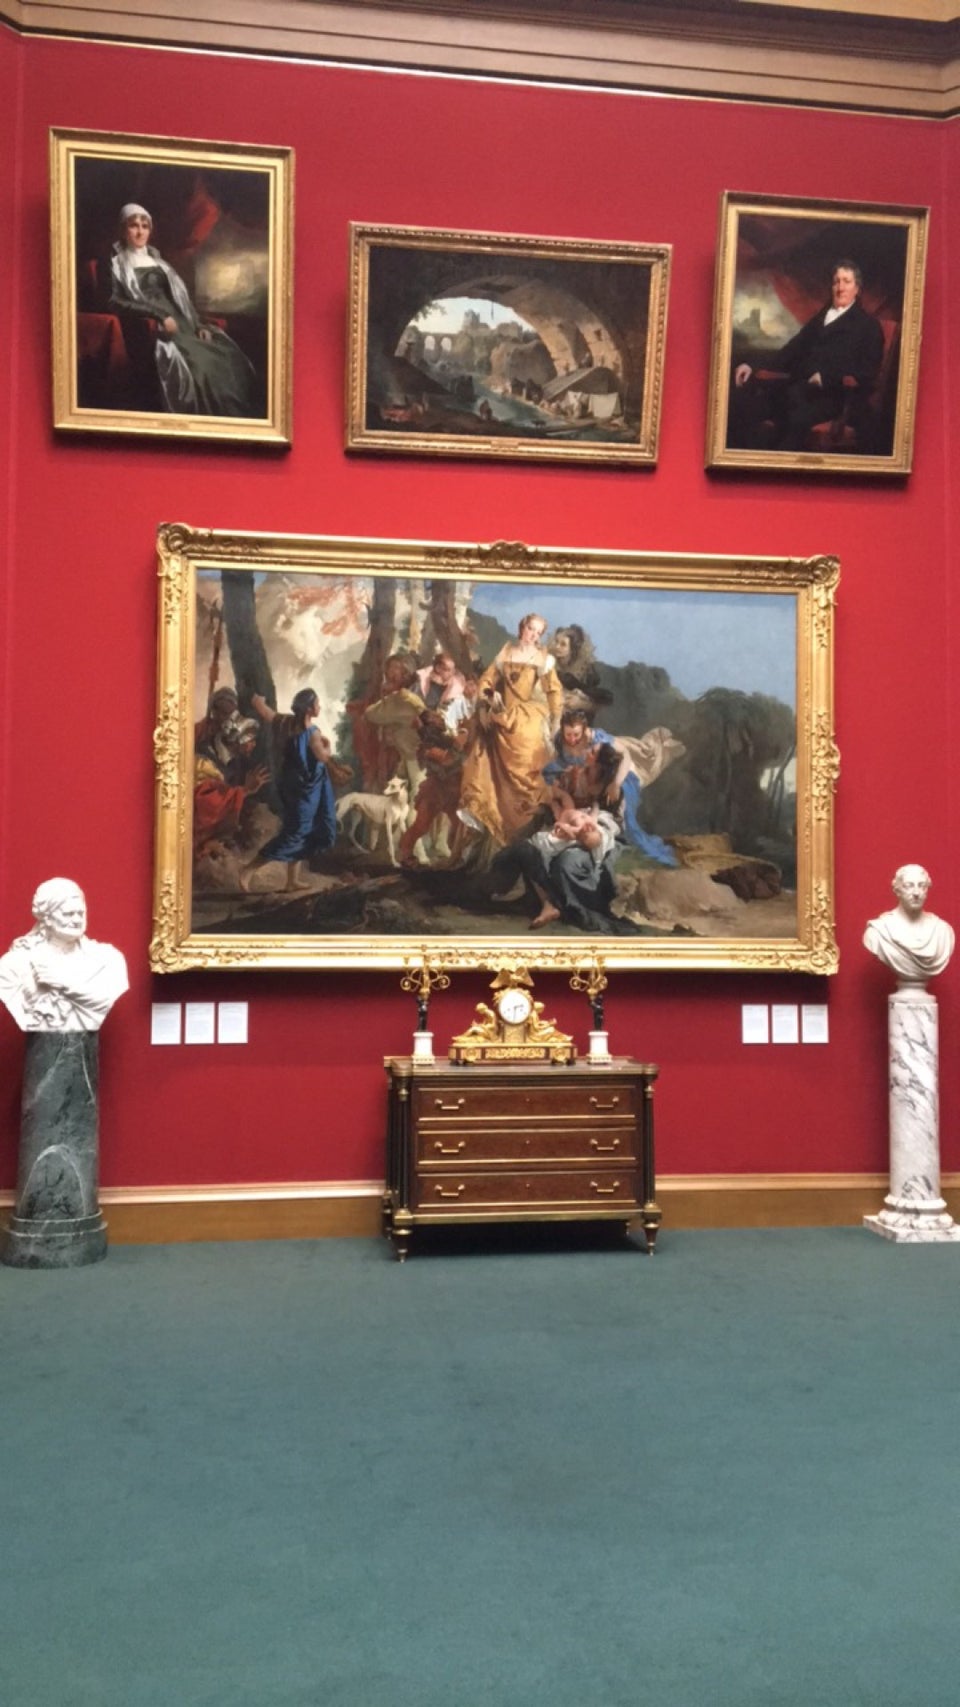 Photo of Scottish National Gallery